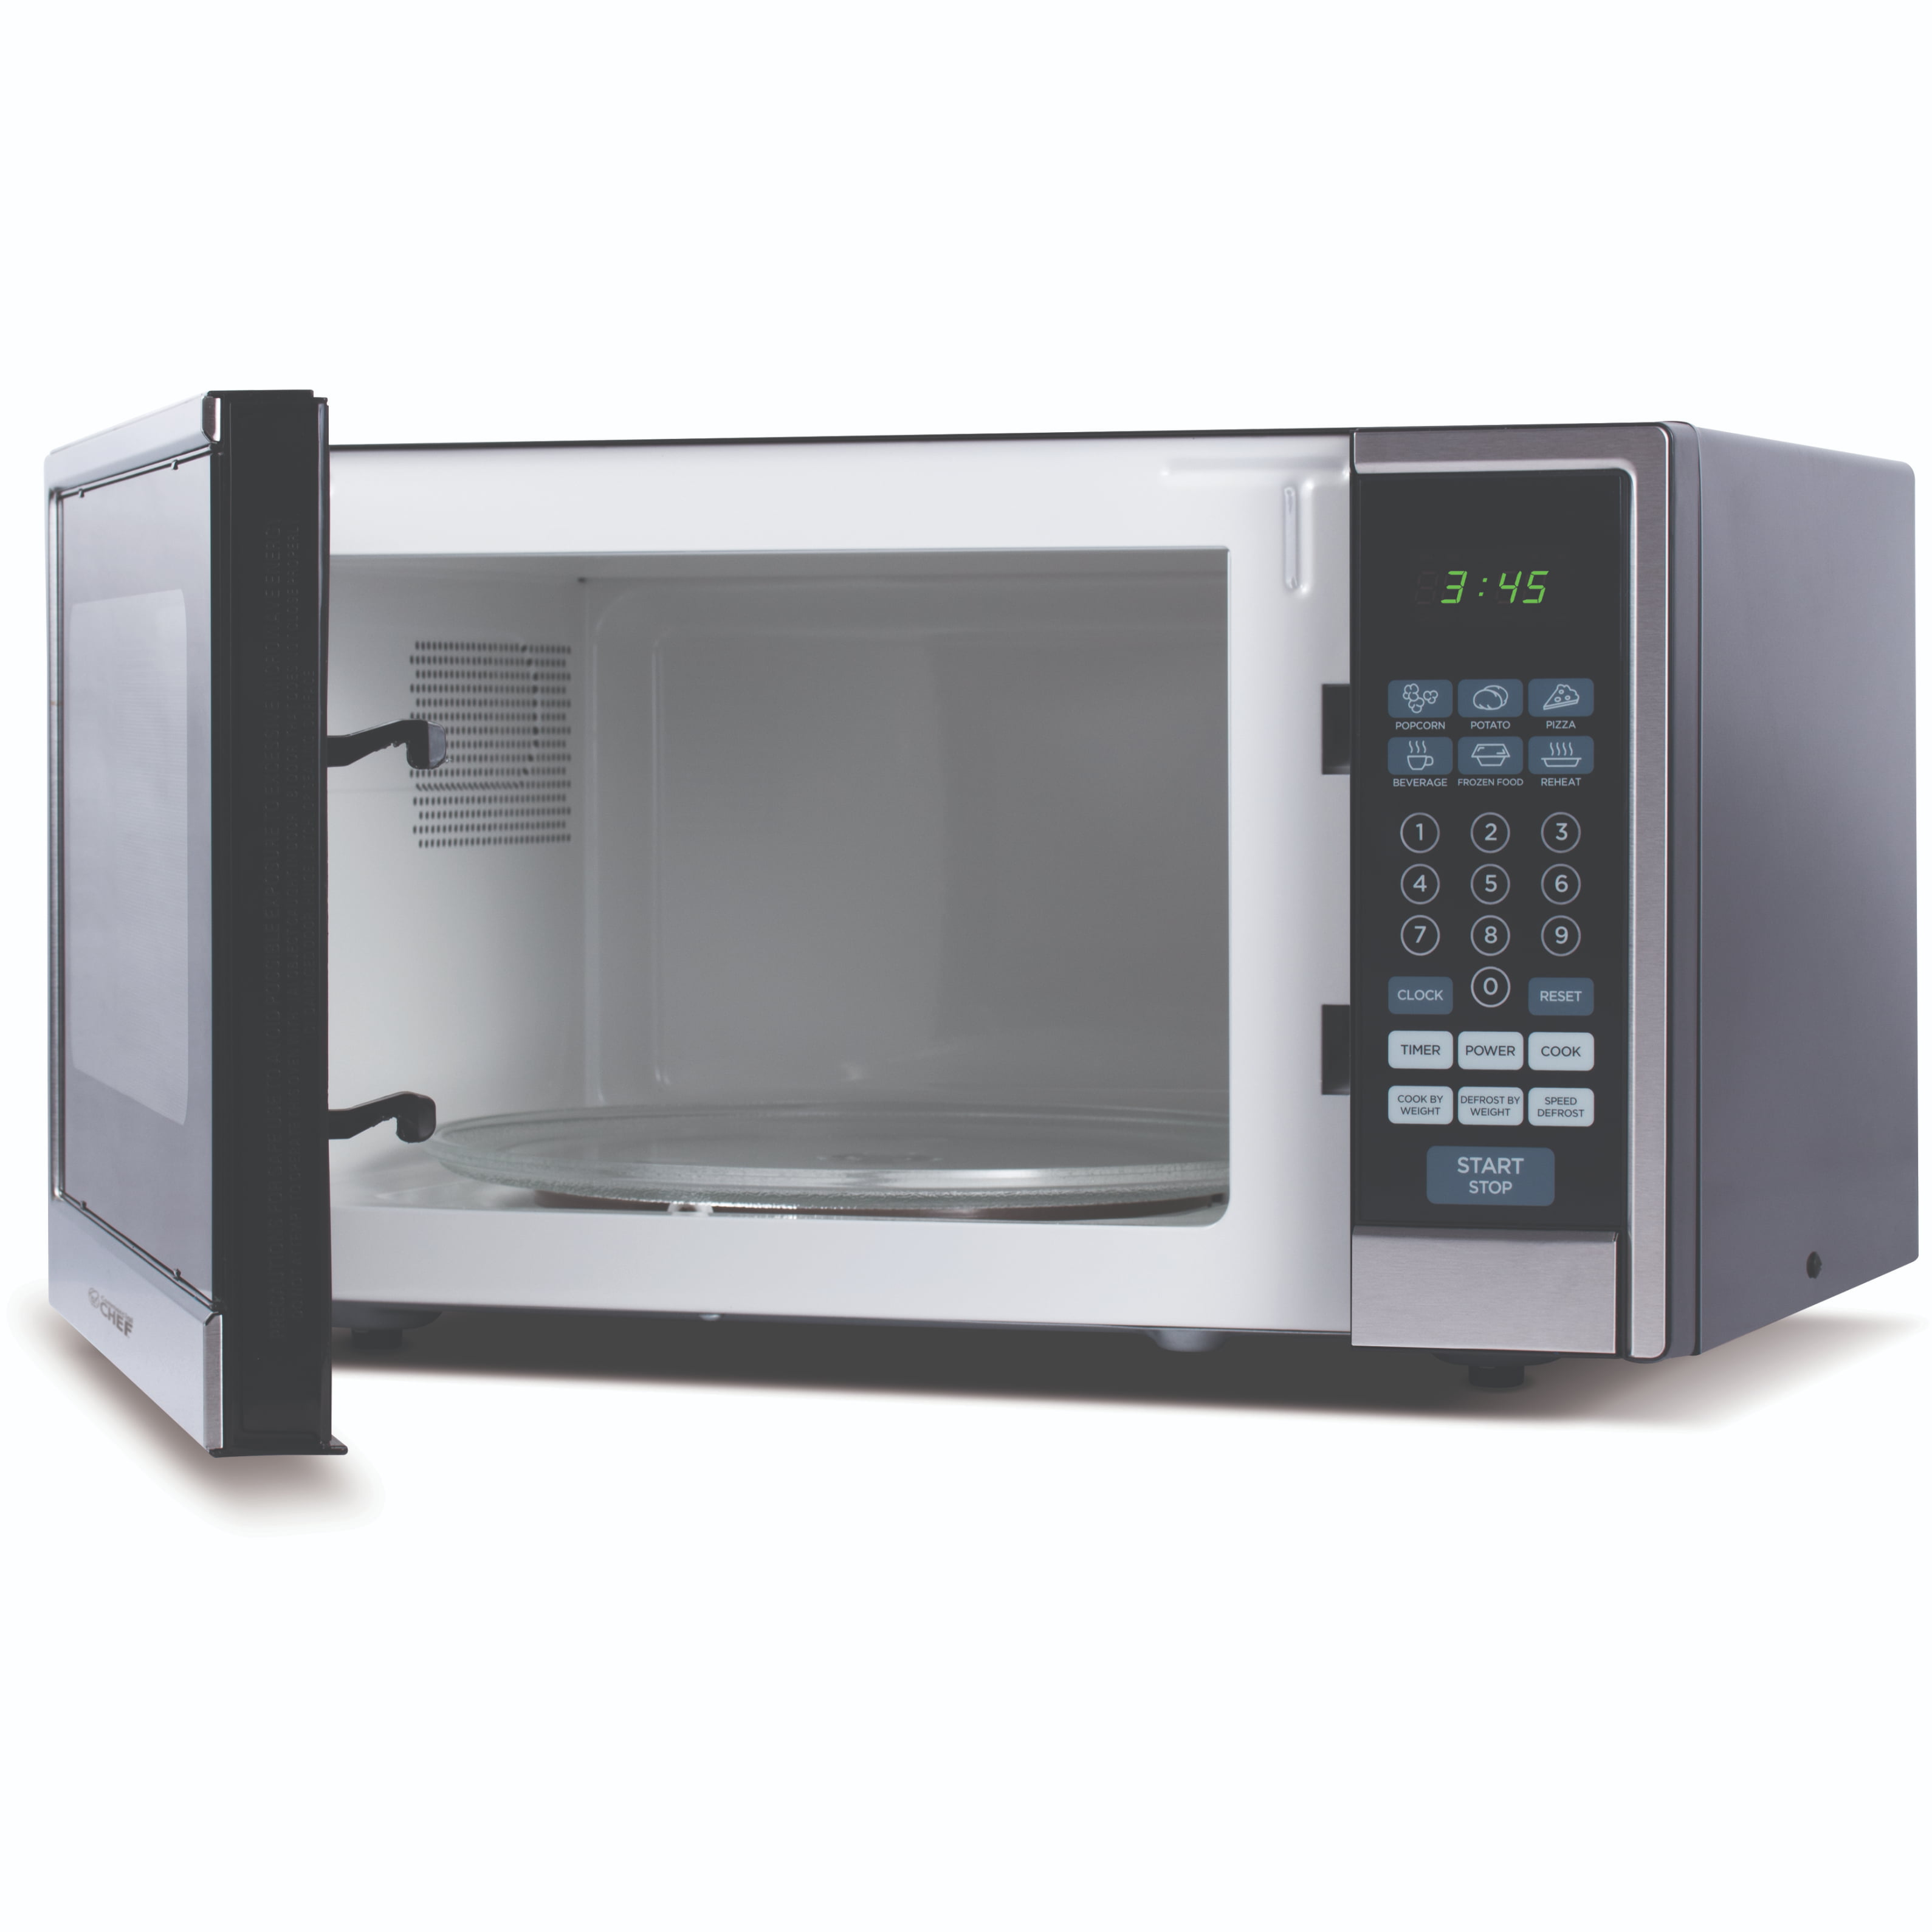 Свч airhot. Микроволновая печь Microwave Oven. Печь микроволновая (1ф, 220в, 0.8КВТ). Микроволновка Beston sd2086b. Печь СВЧ "Airhot wp900".